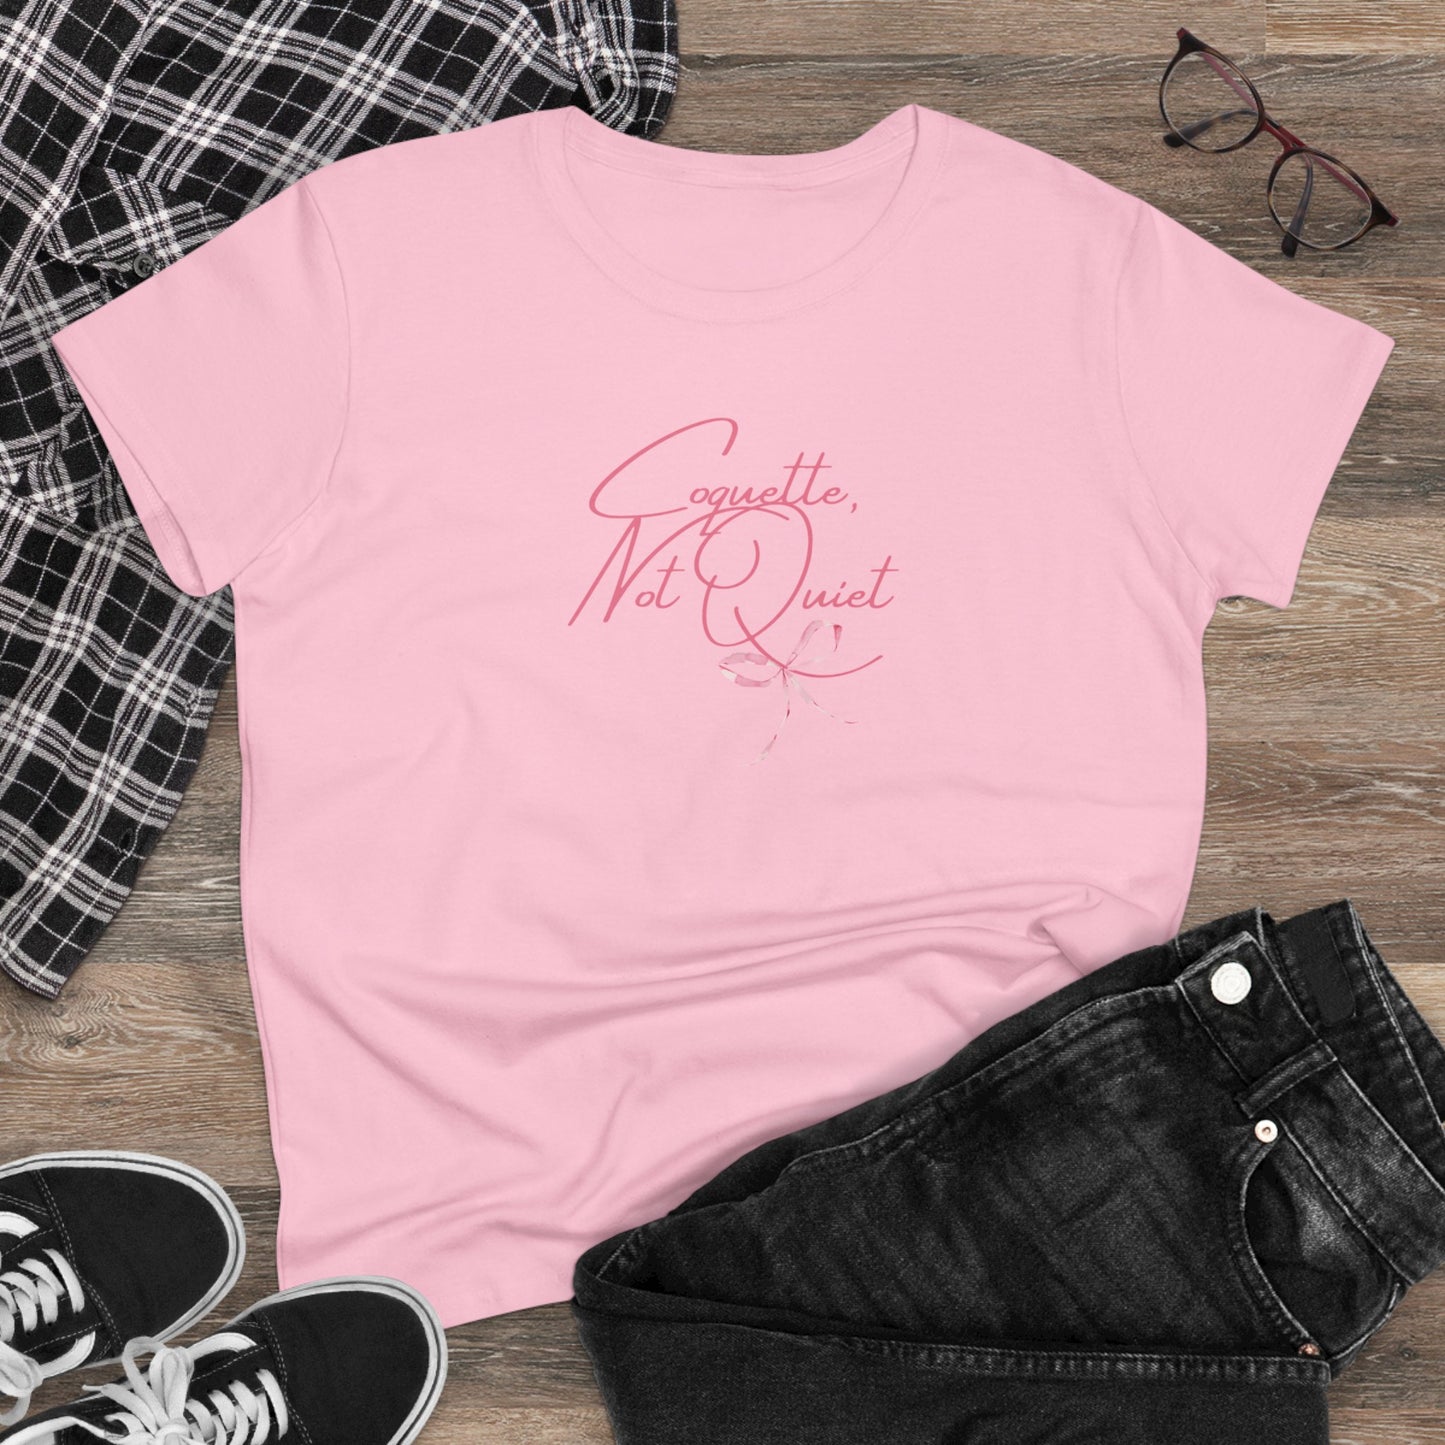 Coquette Tshirt, Coquette, Not Quiet, Coquette Tshirt, Grandmillenial Shirt, Pink Bow Tee, Girly Coquette Clothing